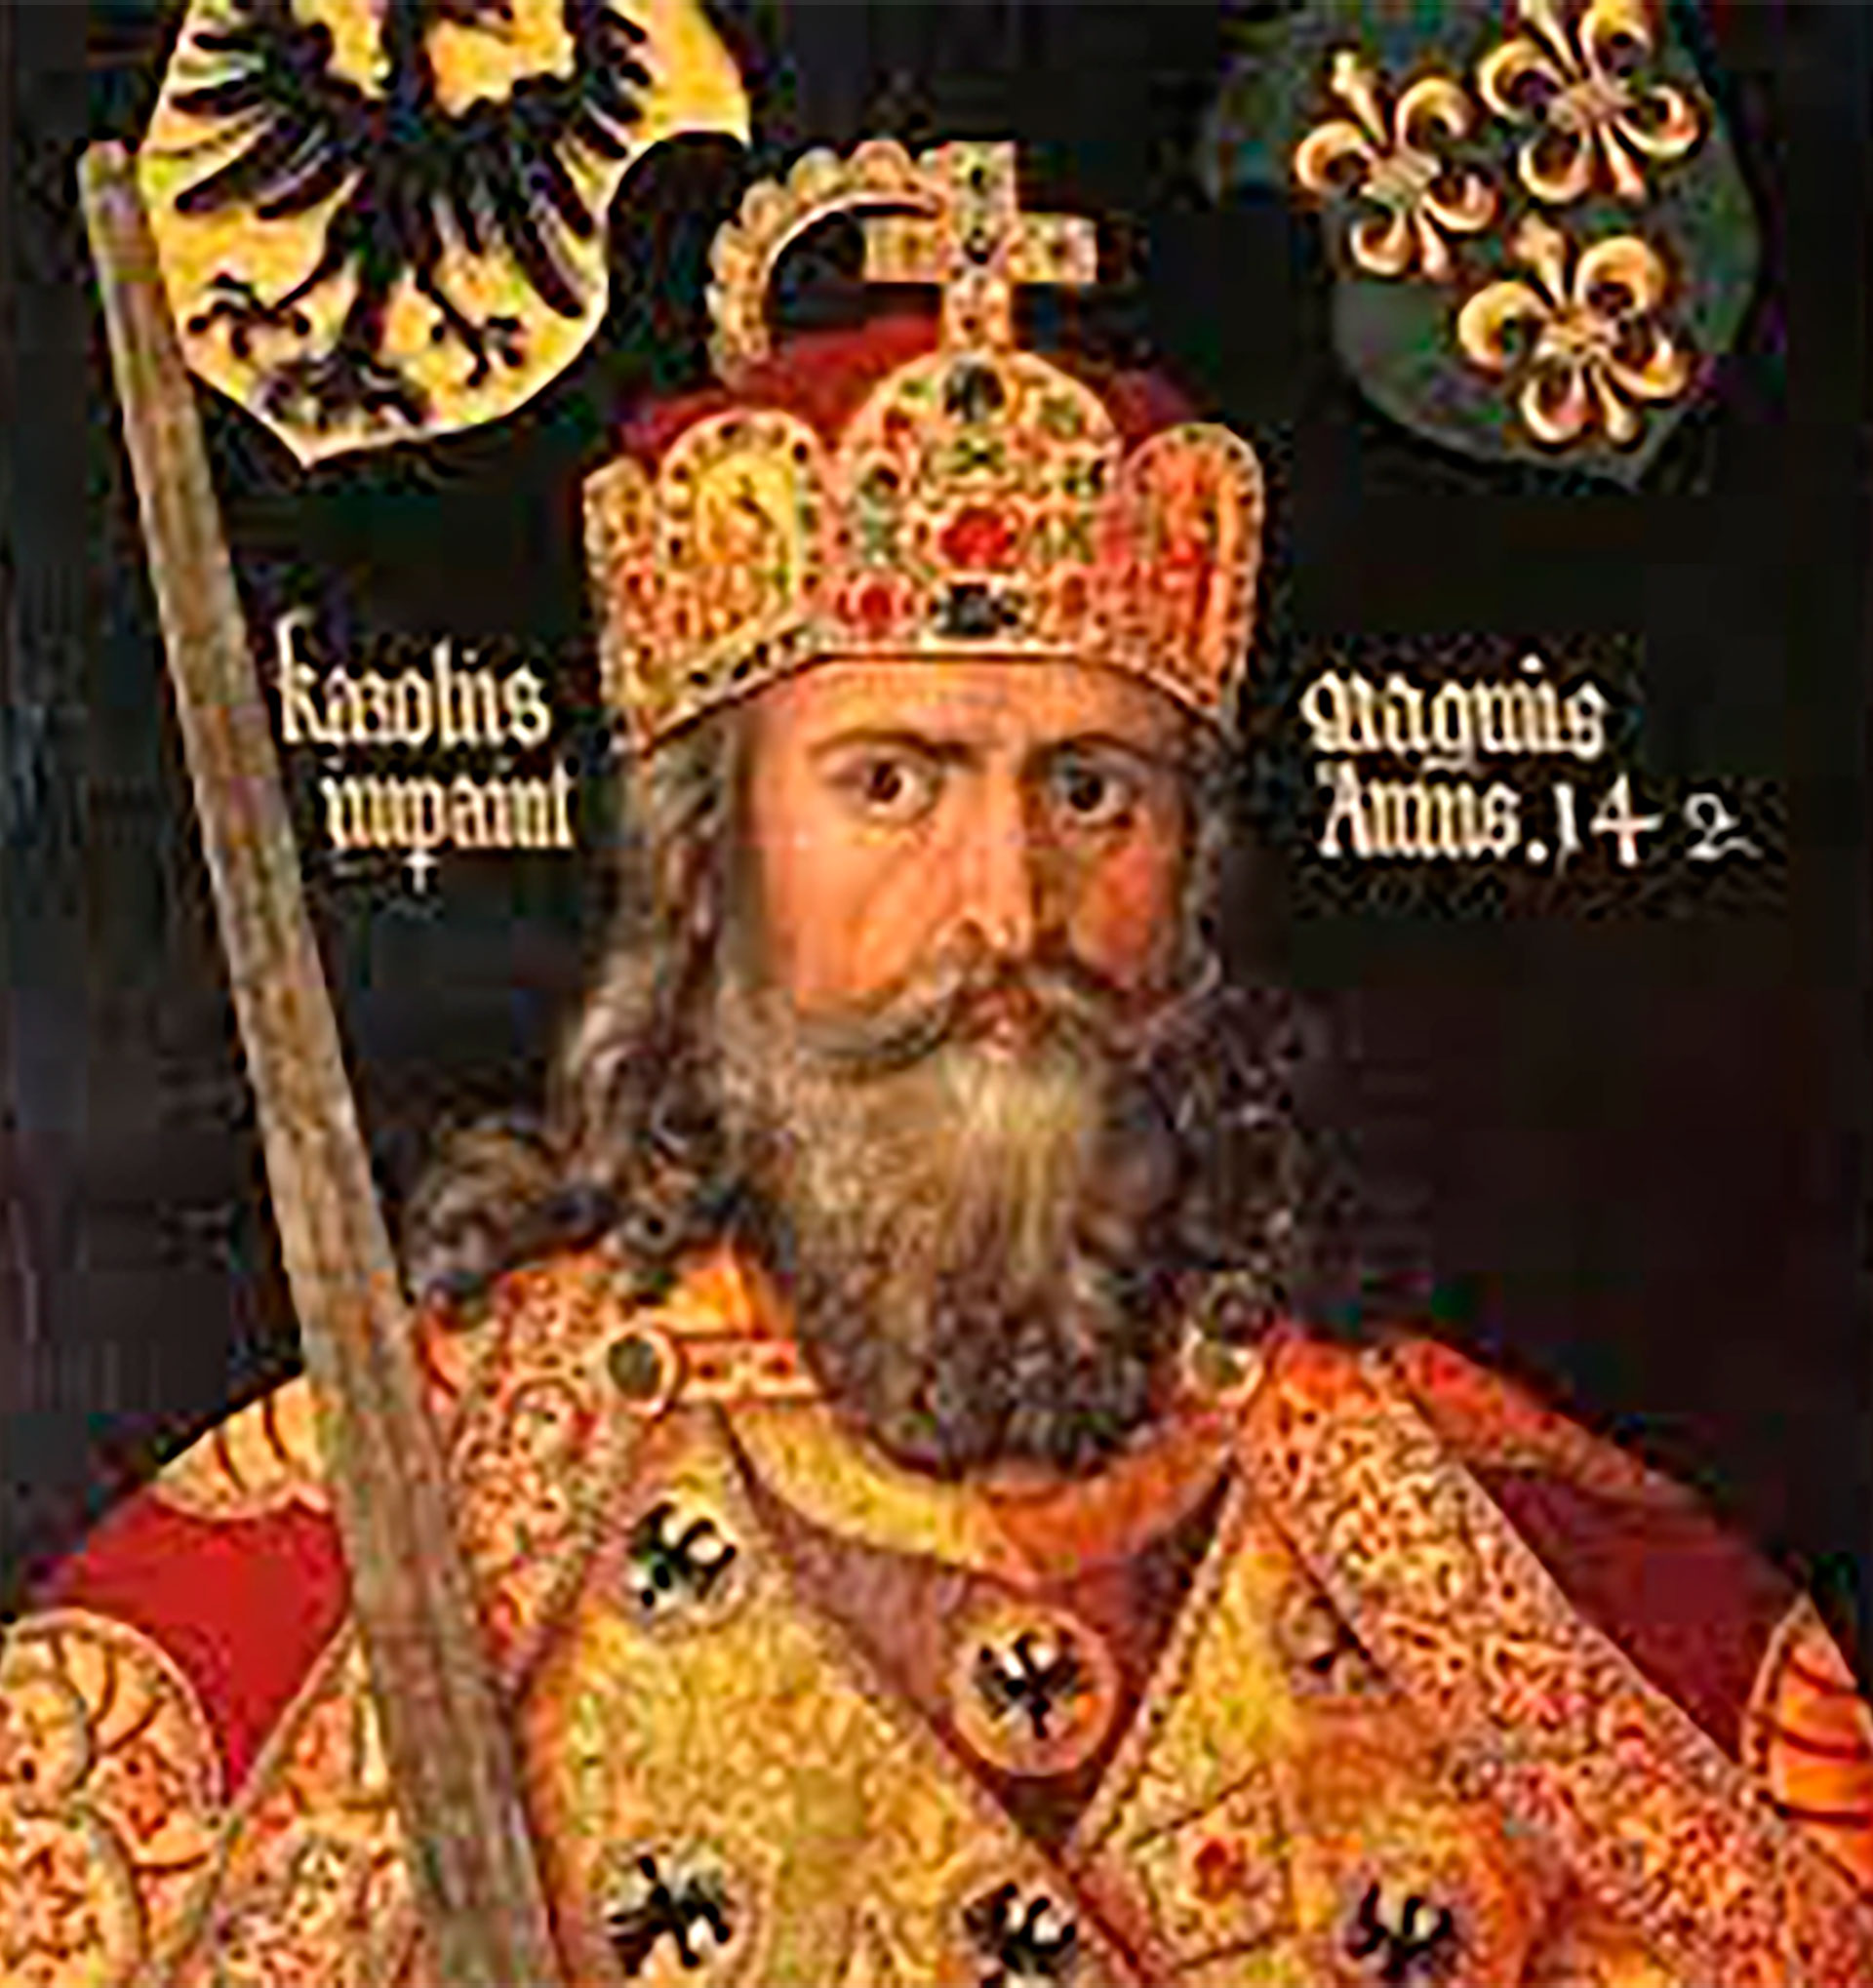 Carlomagno, con rasgos embellecidos, luciendo la corona del Sacro Imperio Romano